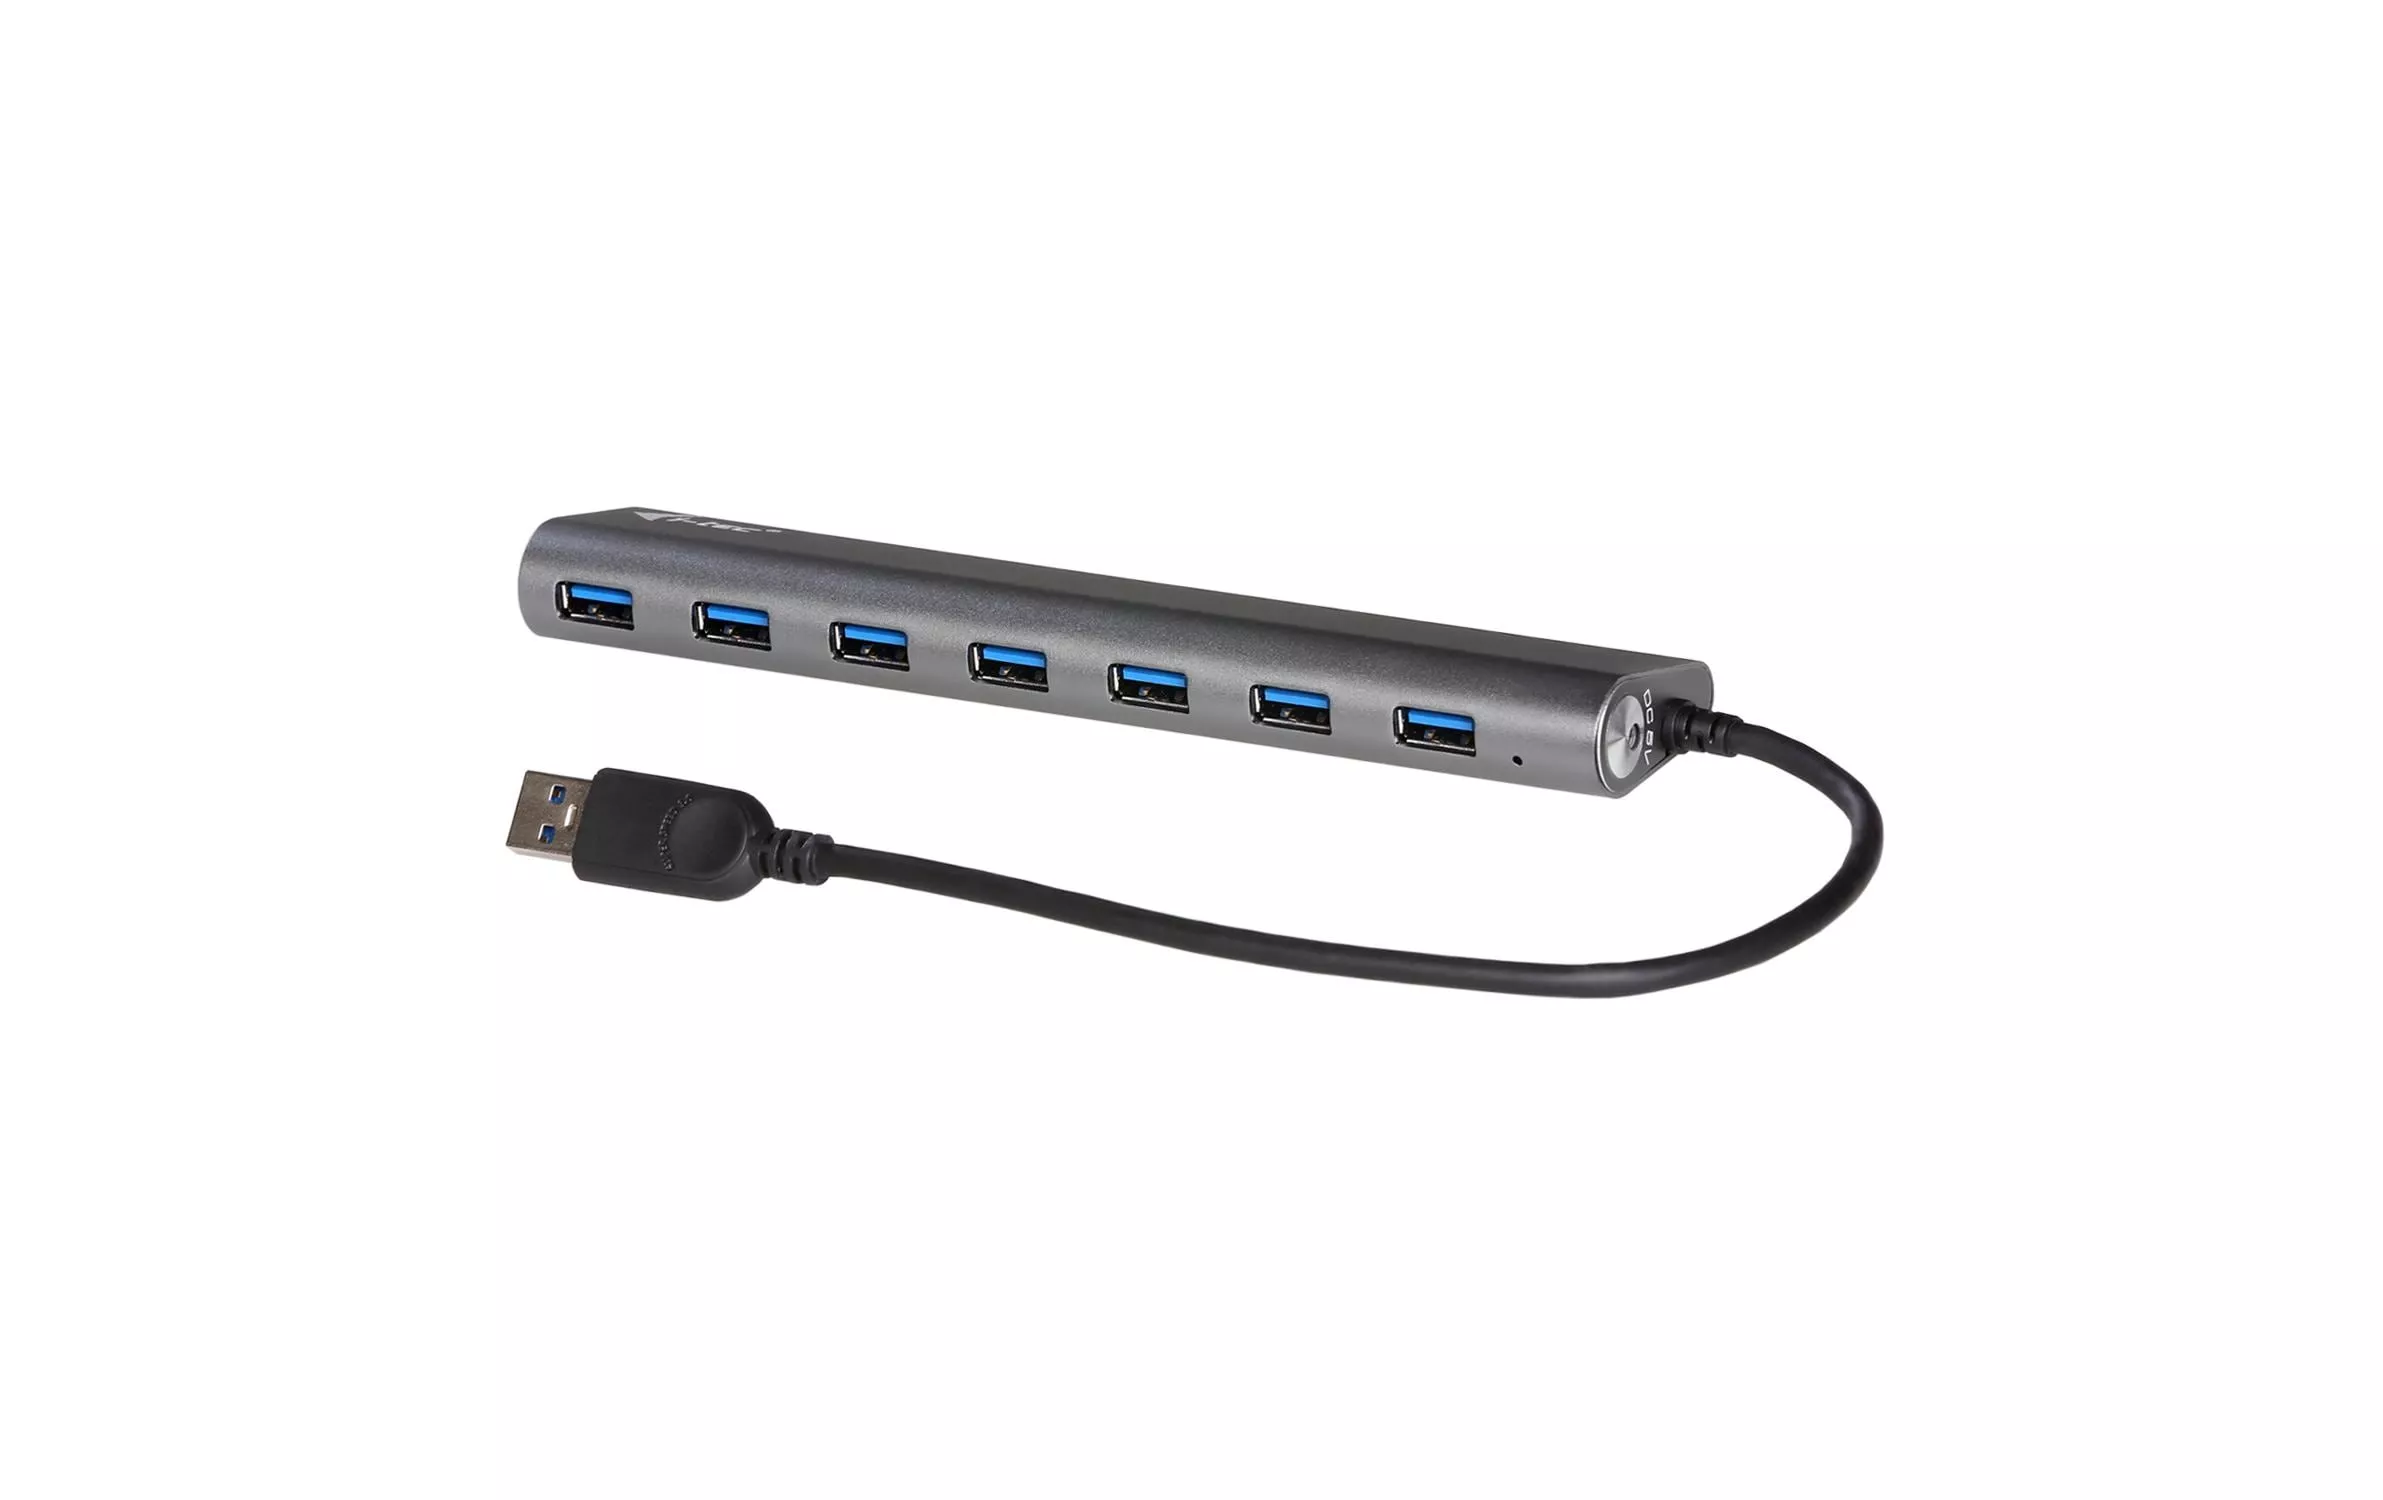 USB-Hub USB 3.0 Metal Charging HUB 7 Port